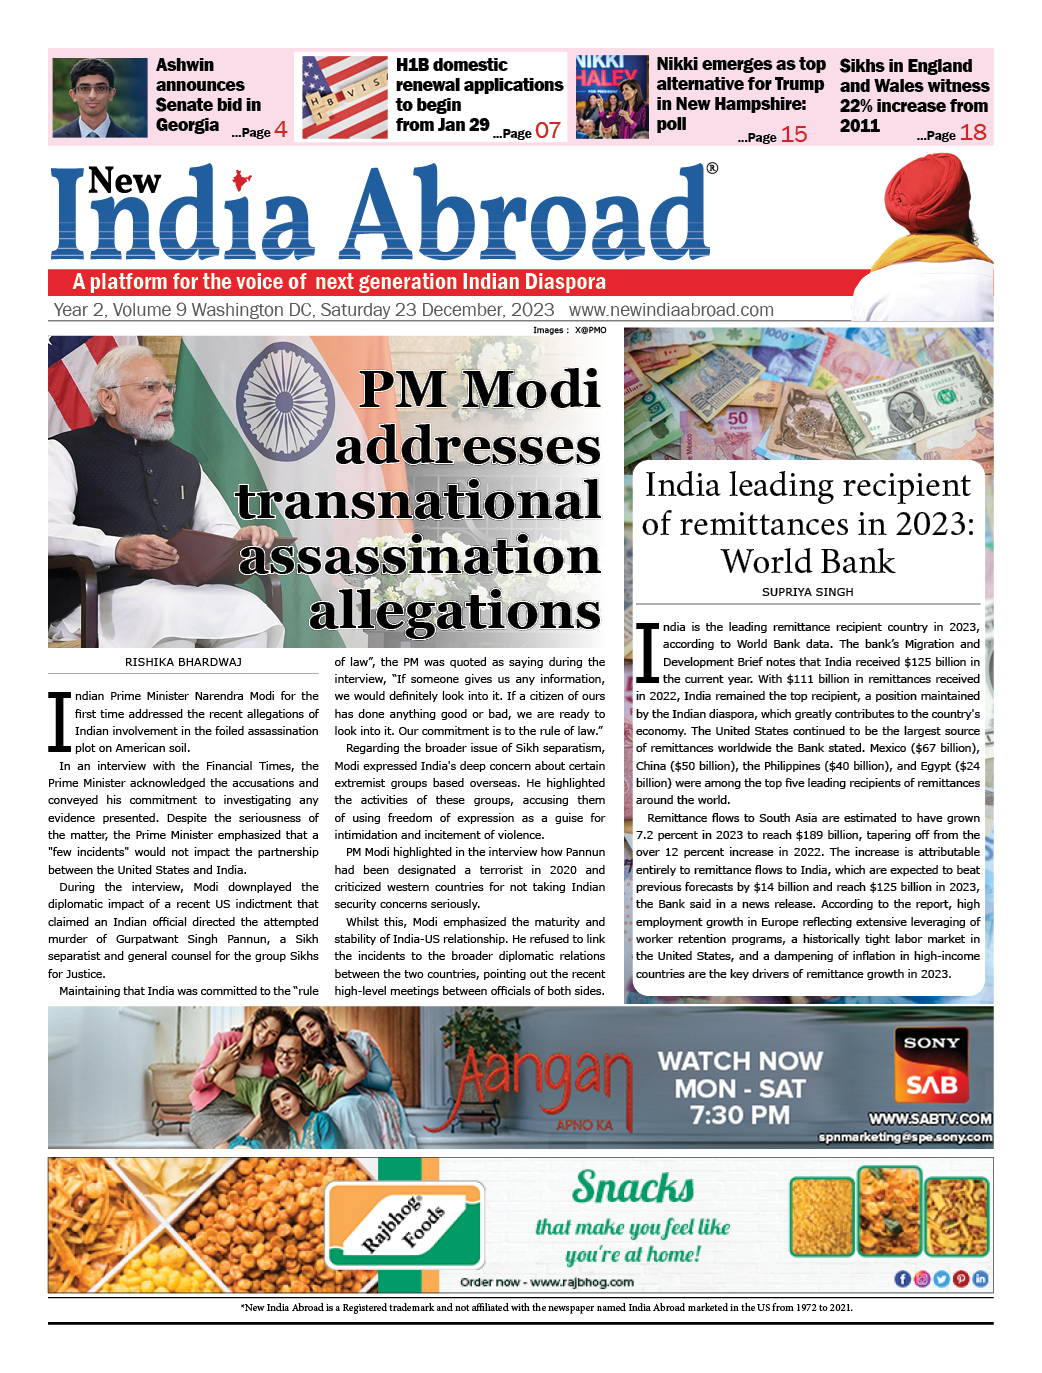 PM Modi addresses transnational assassination allegations